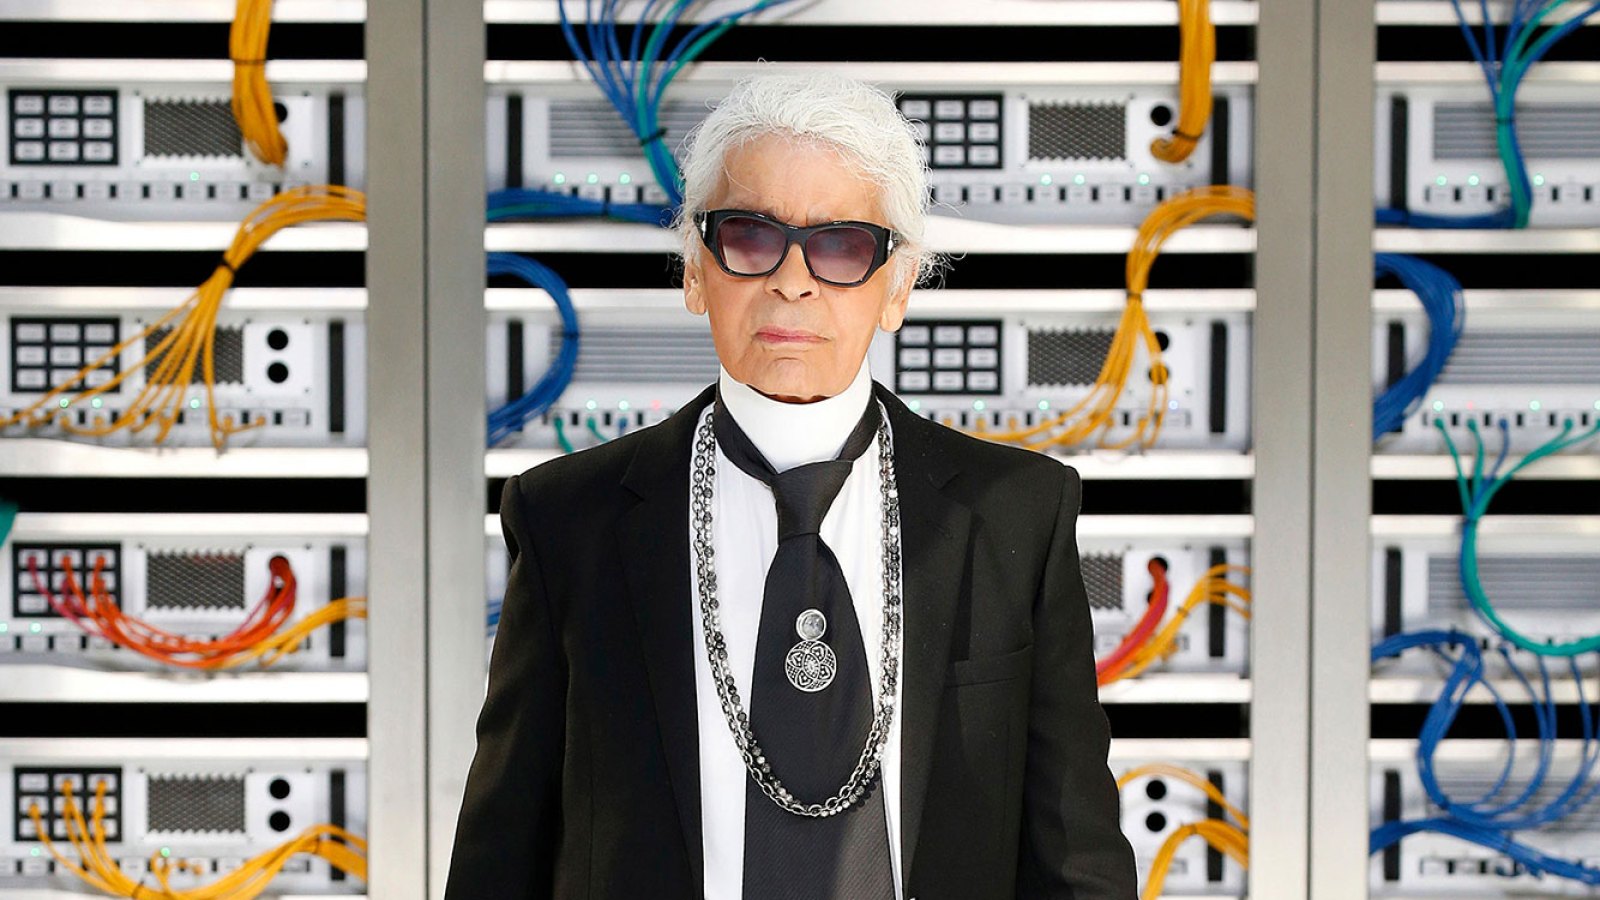 Met Gala 2023: Celebrities Honor The Fashion Legacy of Karl Lagerfeld